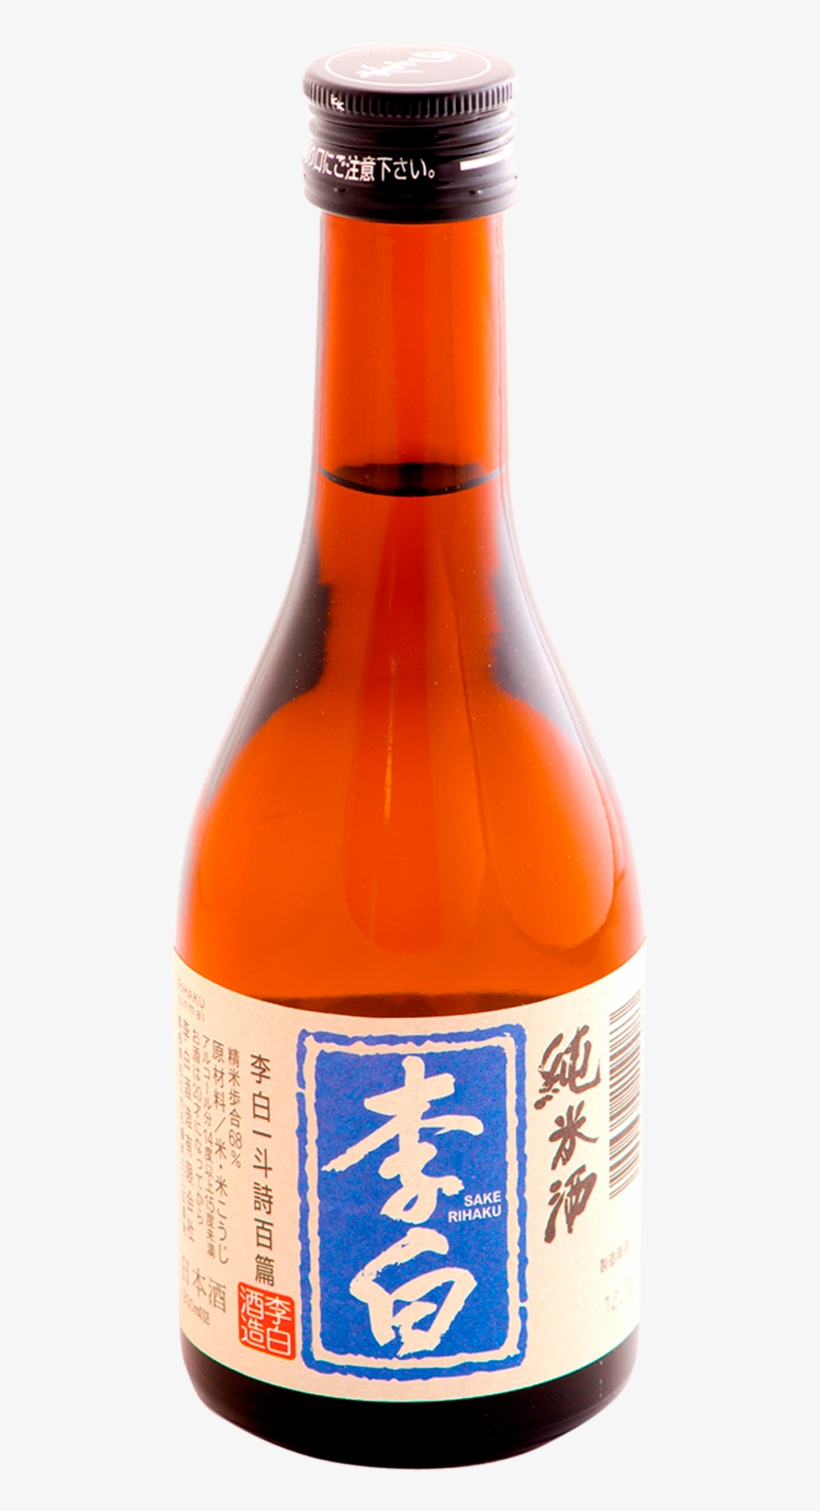 Rihaku Blue Purity Junmai Sake 300ml - 李白 純米酒 300ml, transparent png #3419419